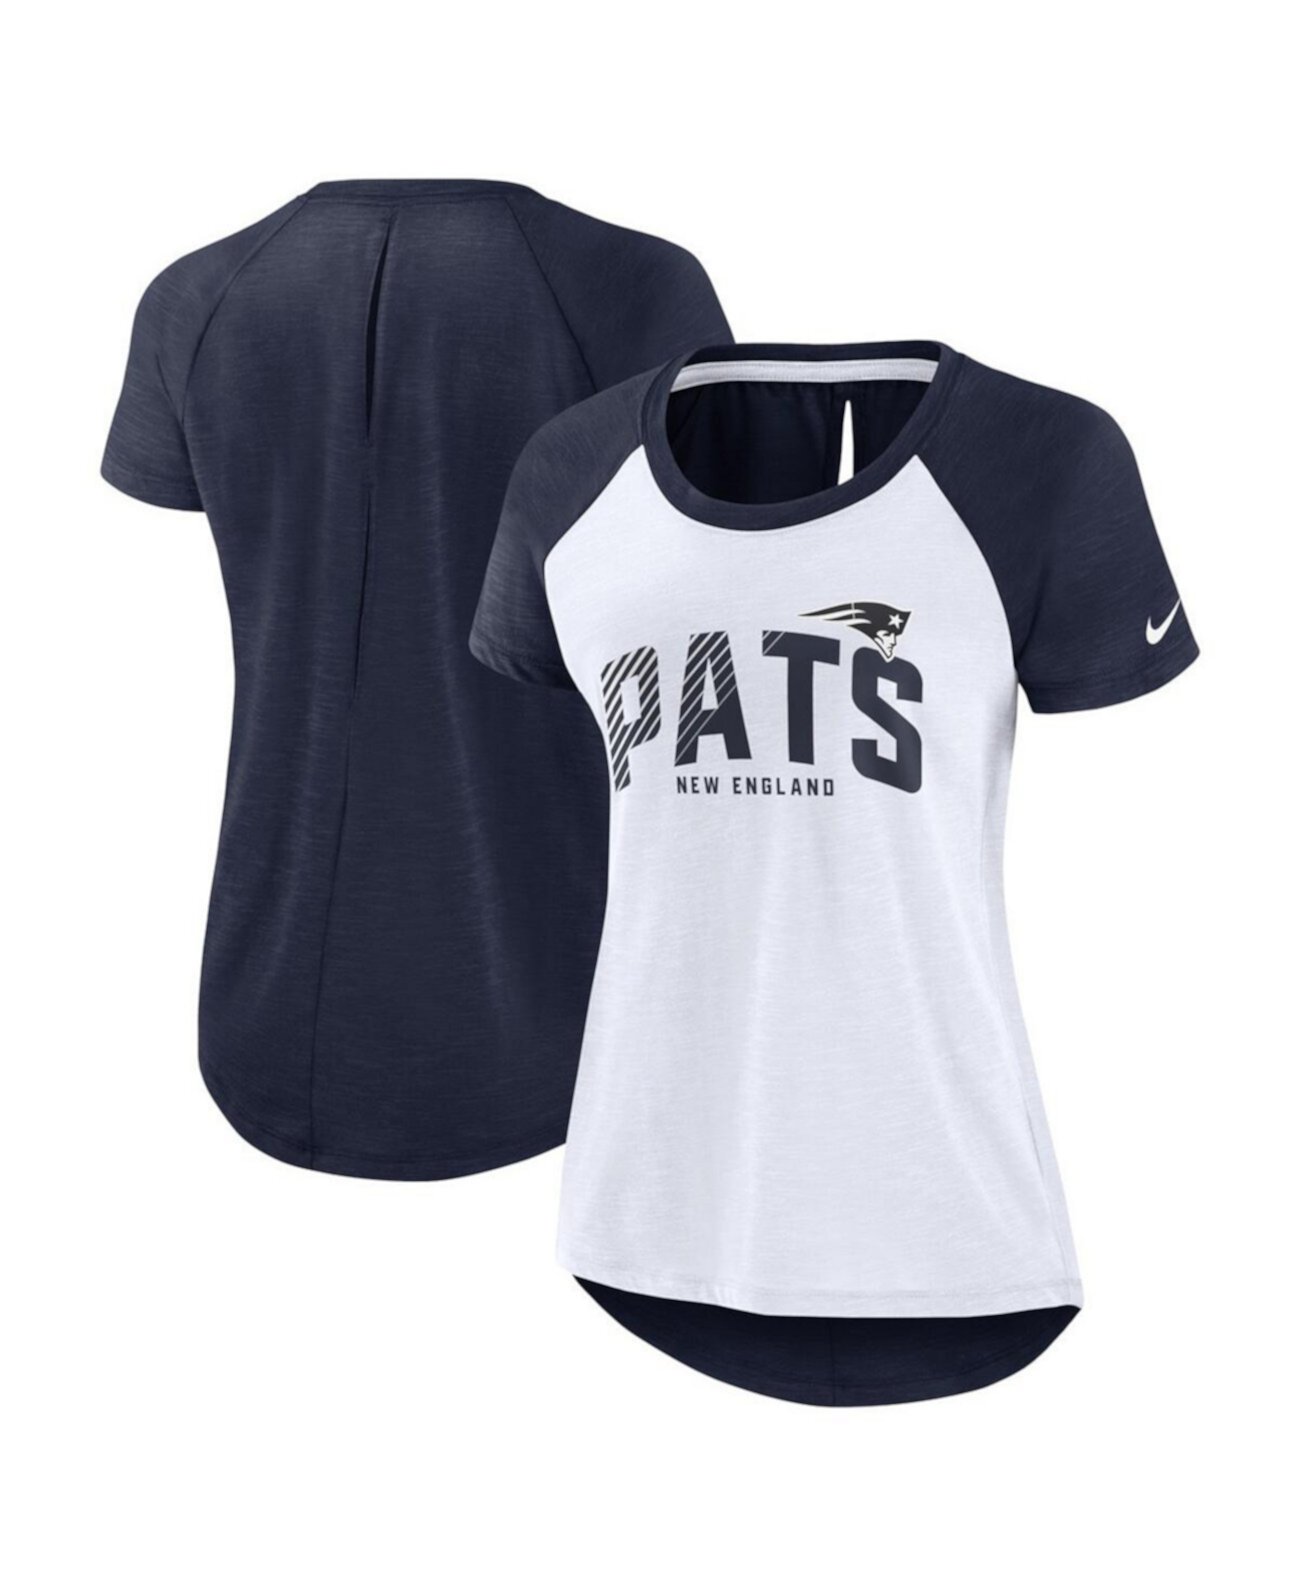 Women's White, Navy New England Patriots Back Slit Lightweight Fashion T-shirt Nike